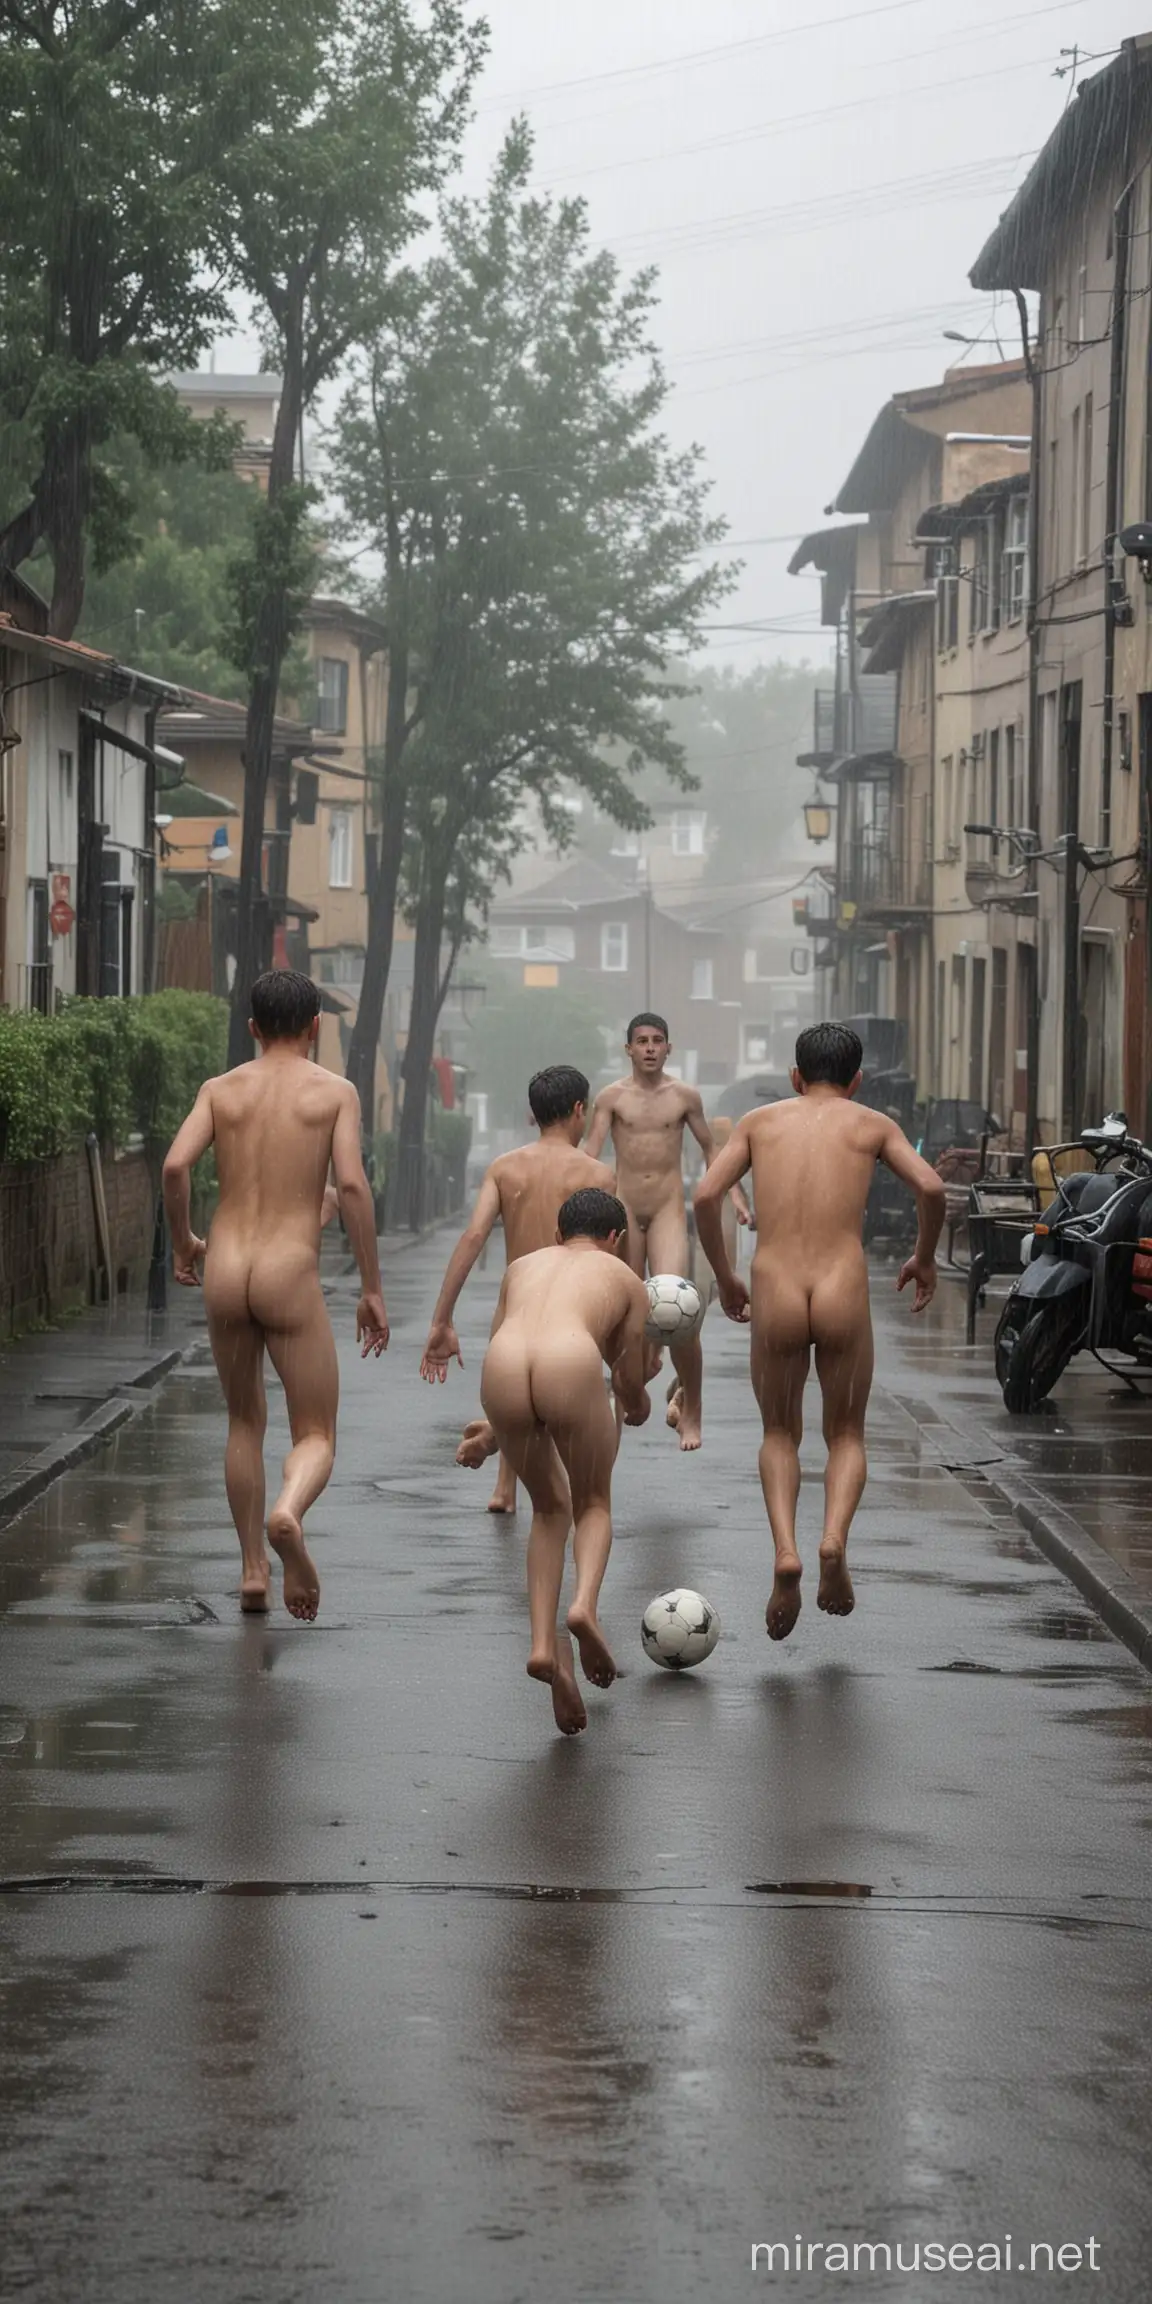 Street Soccer Showdown Intense Competition Under the Rain